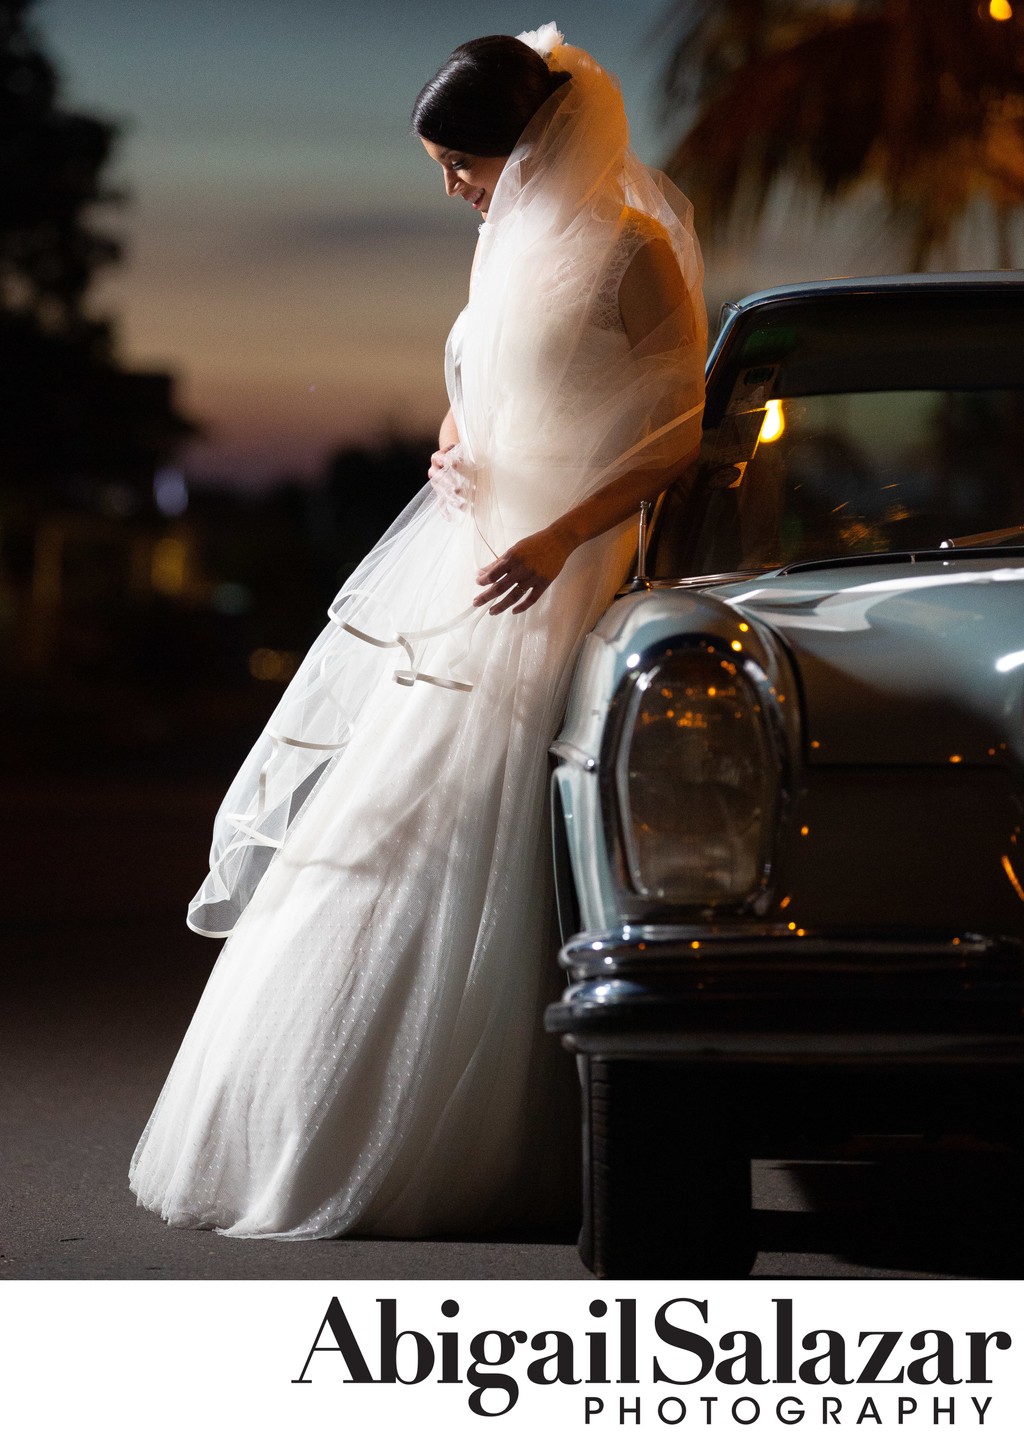 Bridal portrait: Bride & classic wedding car